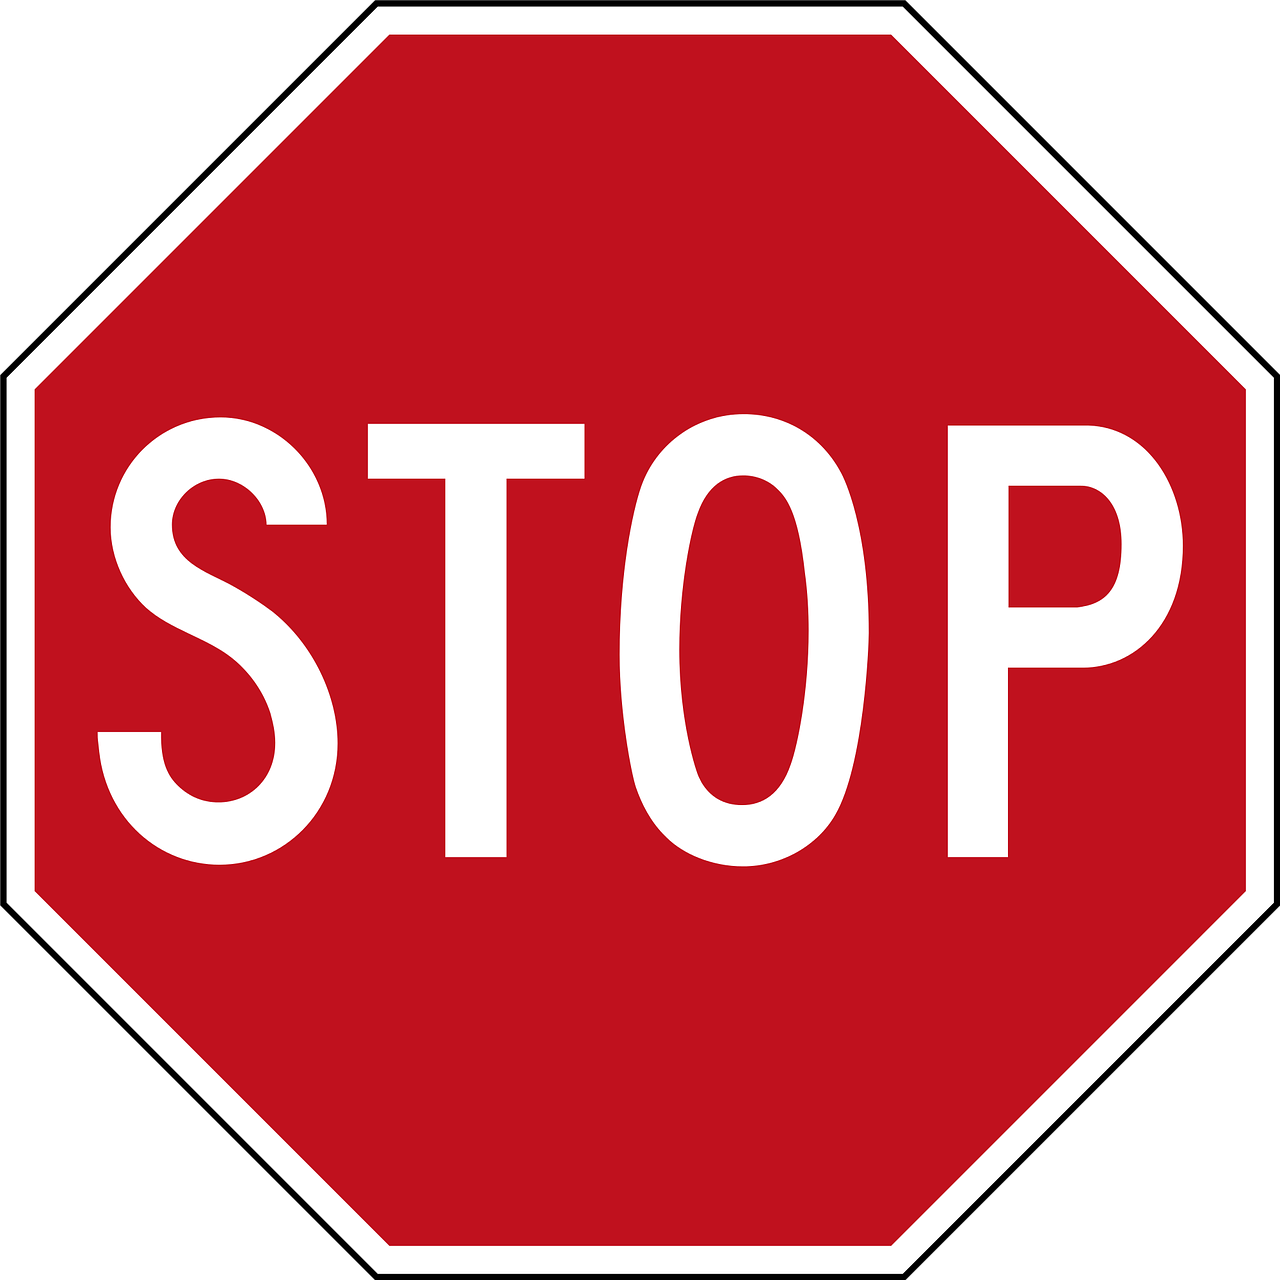 https://pixabay.com/en/stop-road-panel-ban-traffic-1327126/